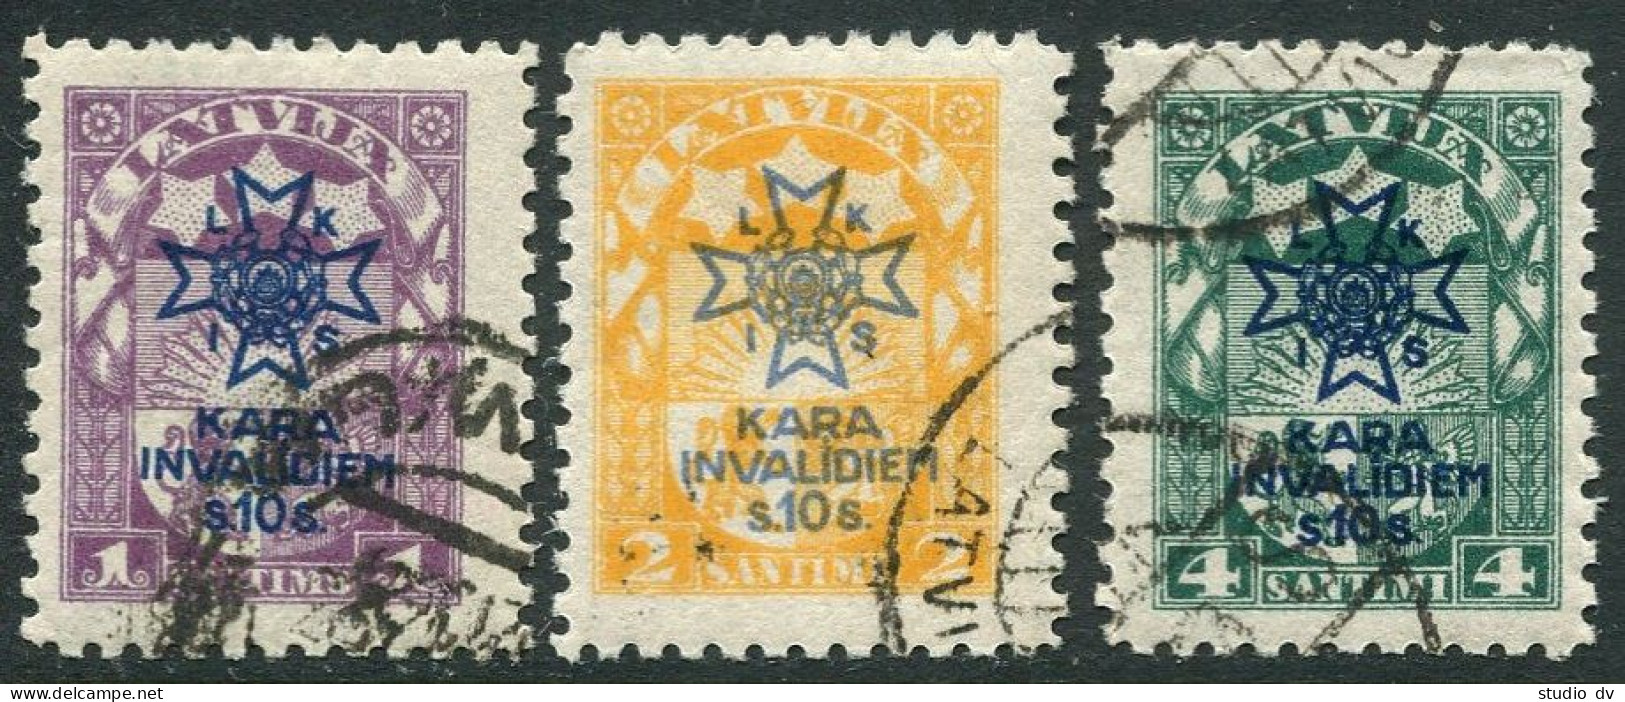 Latvia B21-B23, Used. Michel 100-102. Latvian War Invalids Society, 1923. - Letland